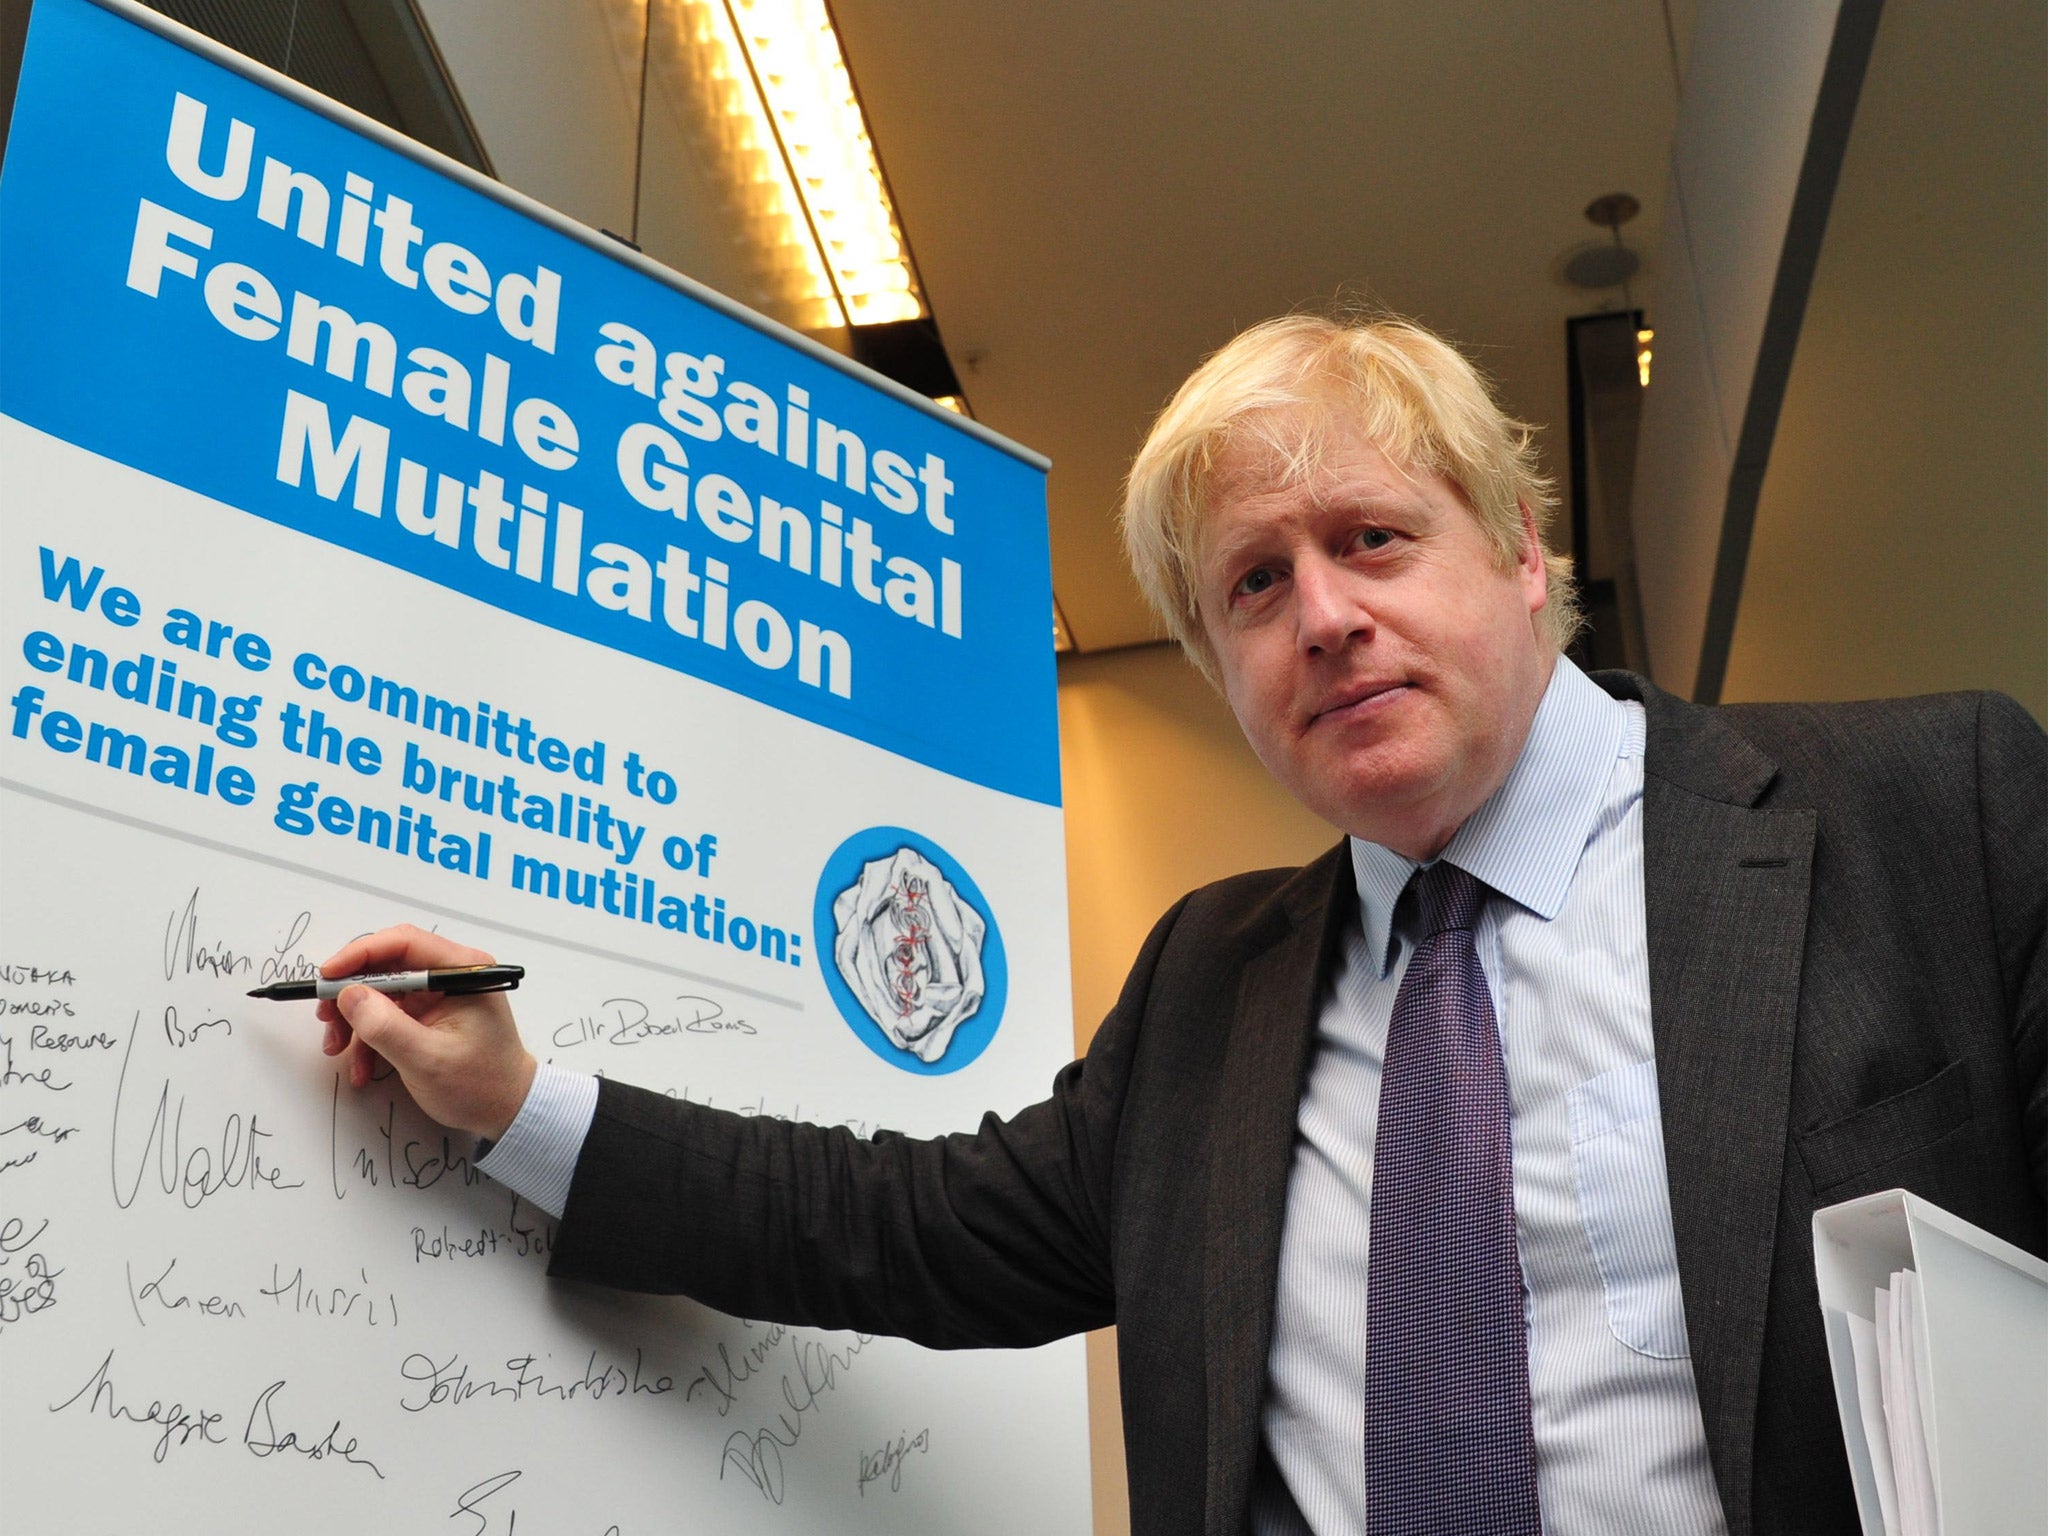 London Mayor Boris Johnson at the Uniting Against Female Genital Mutilation press conference at City Hall